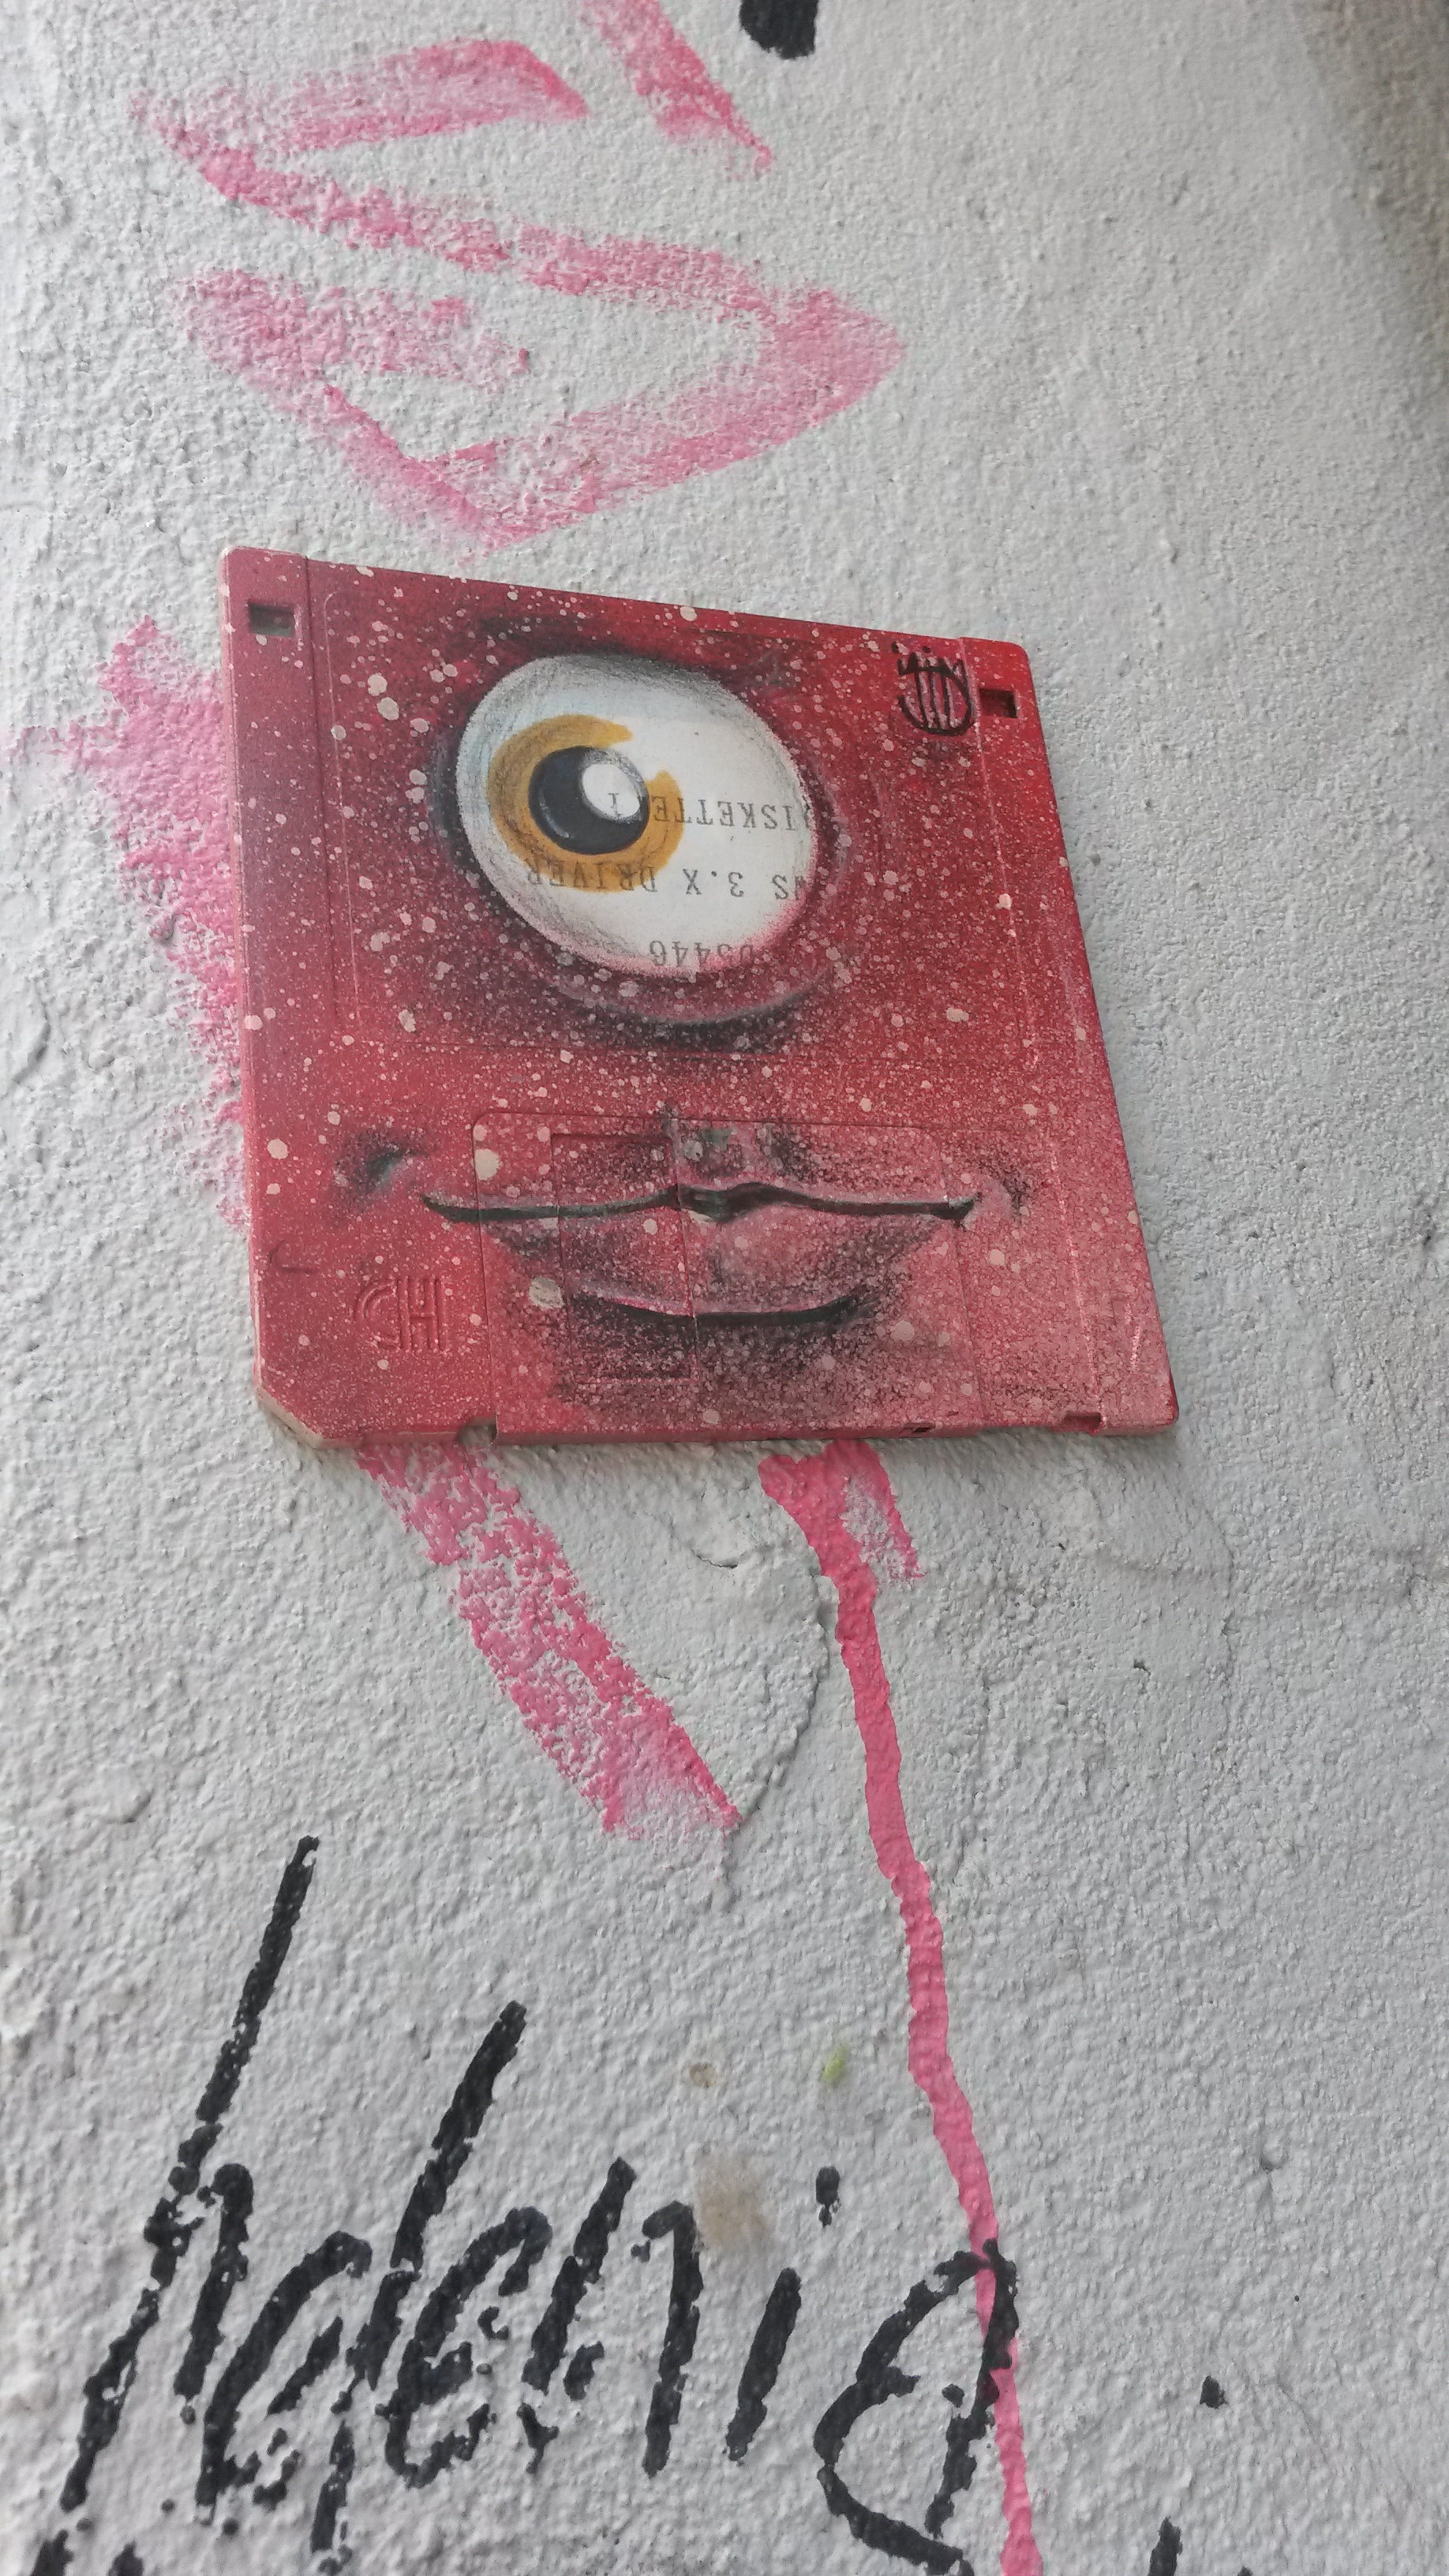 Floppy Disk in St. Pauli